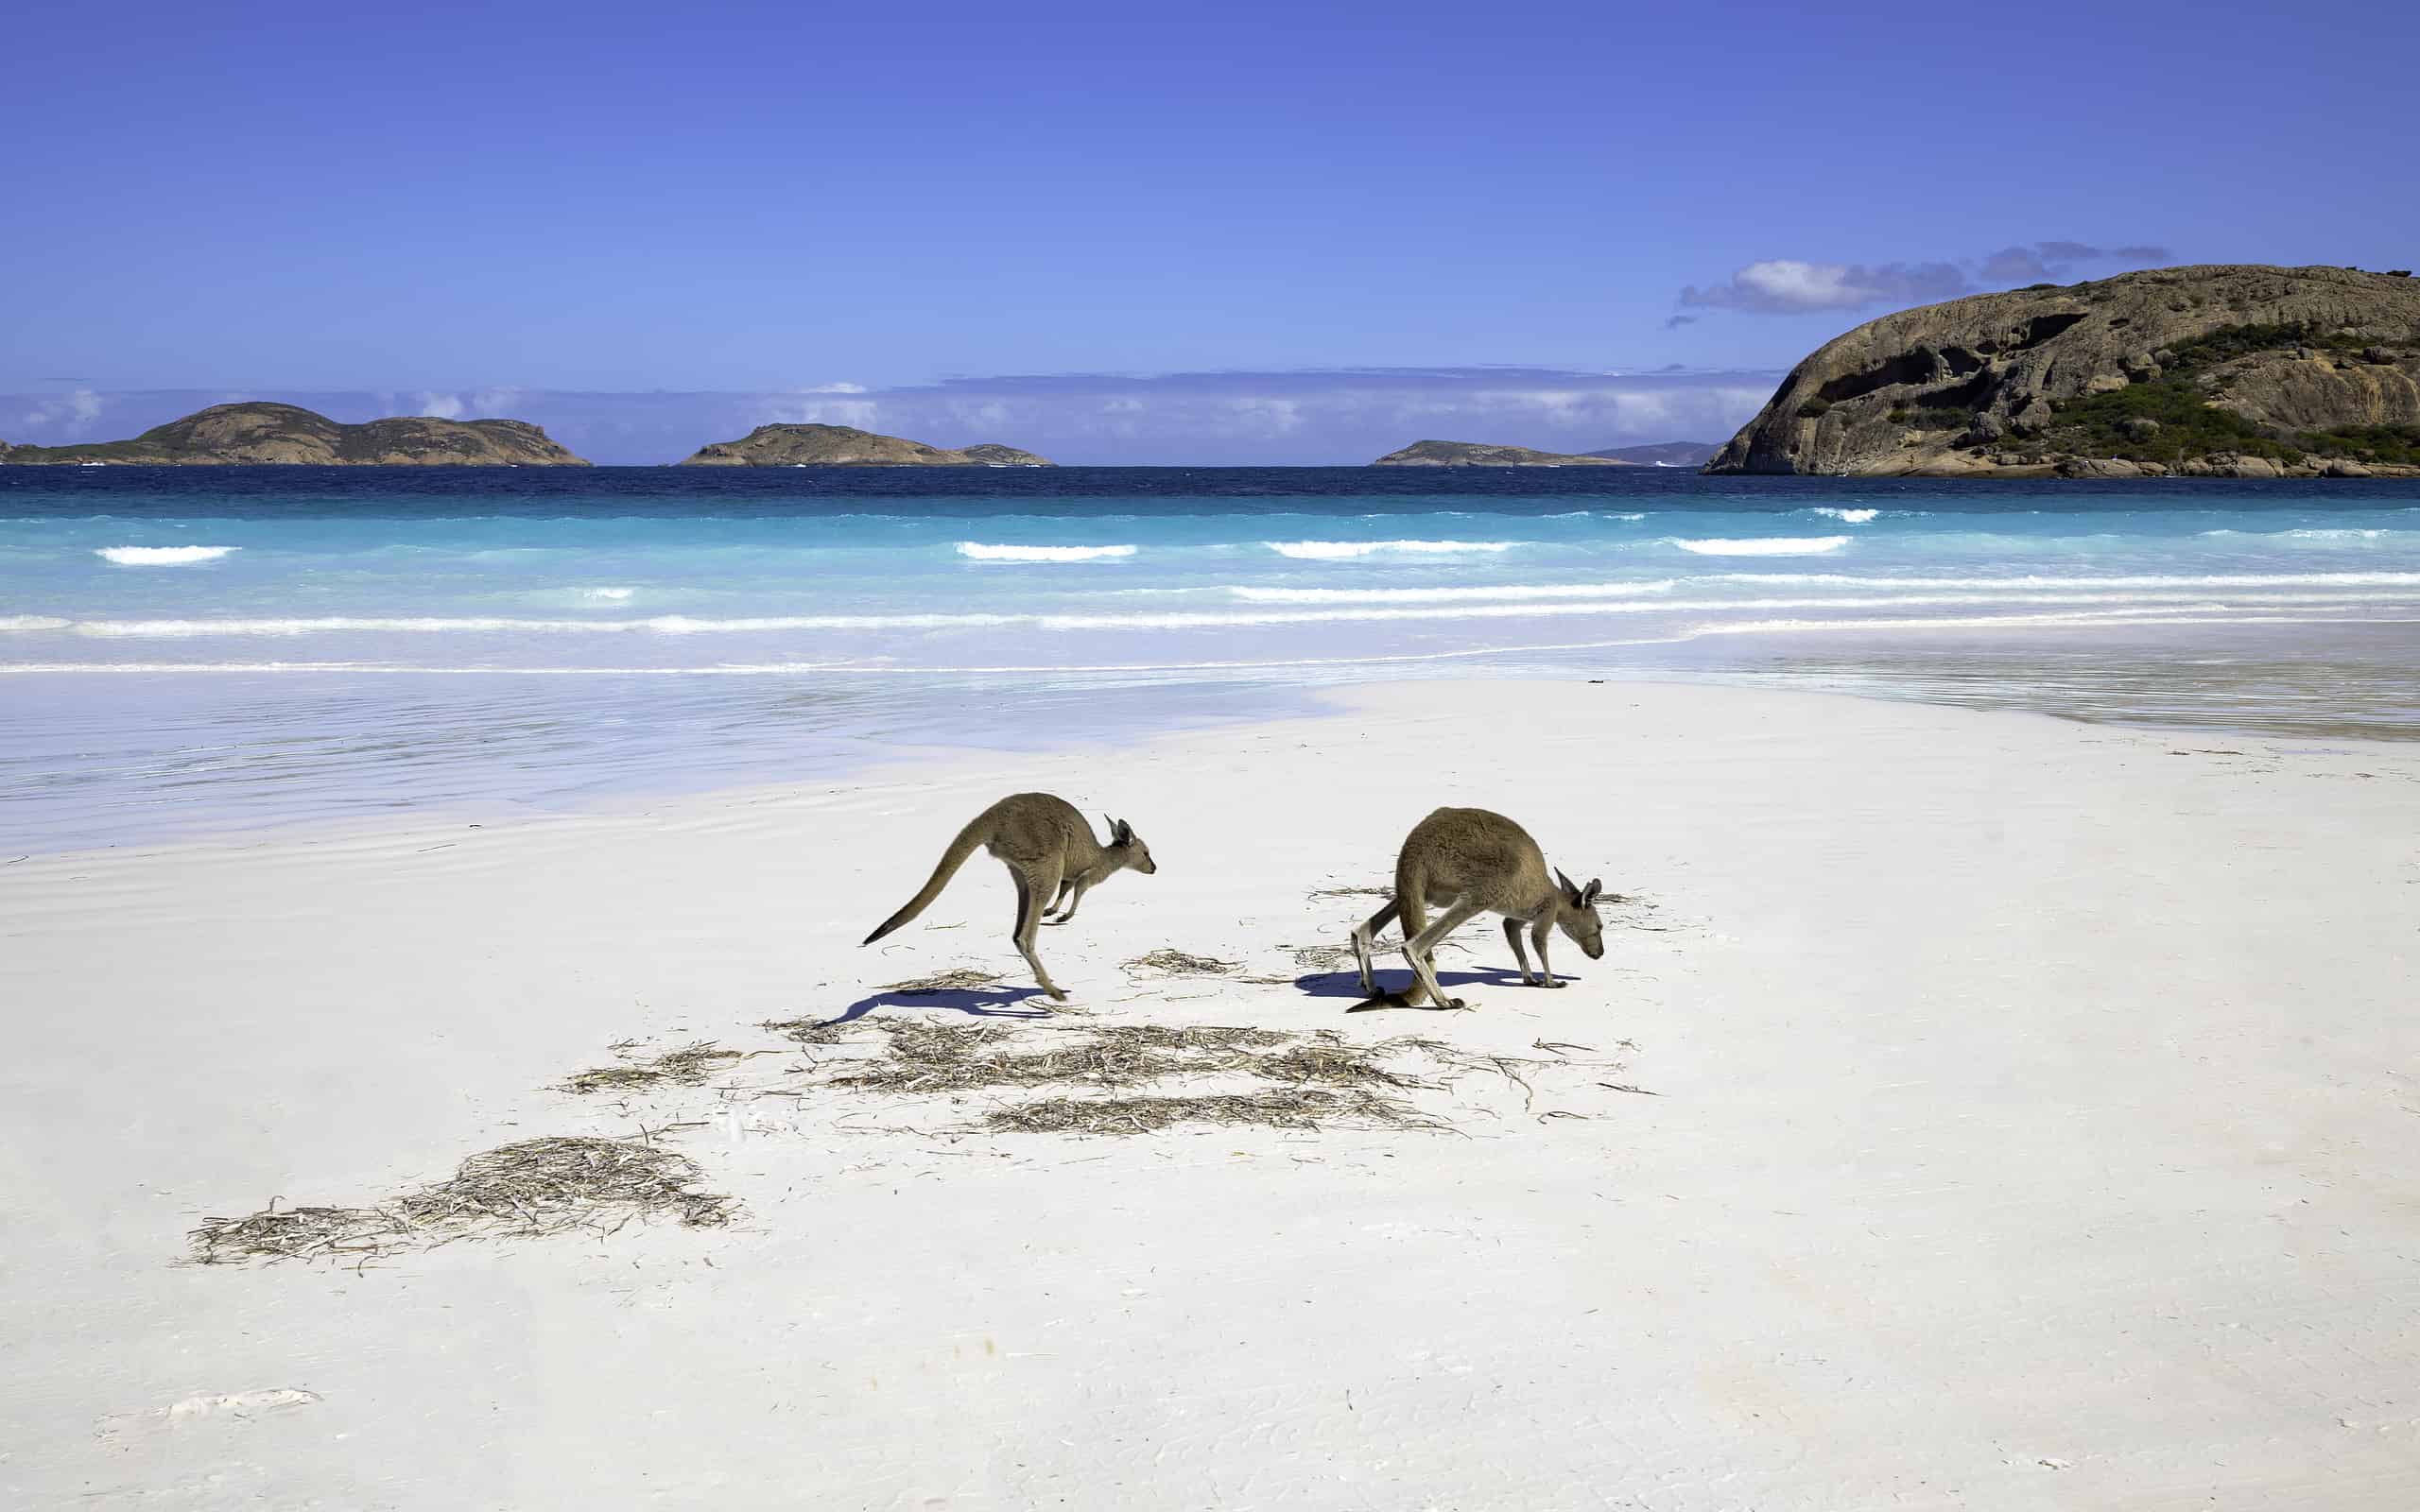 Kangaroo family on the beach of Lucky bay, Esperance, Western Australia